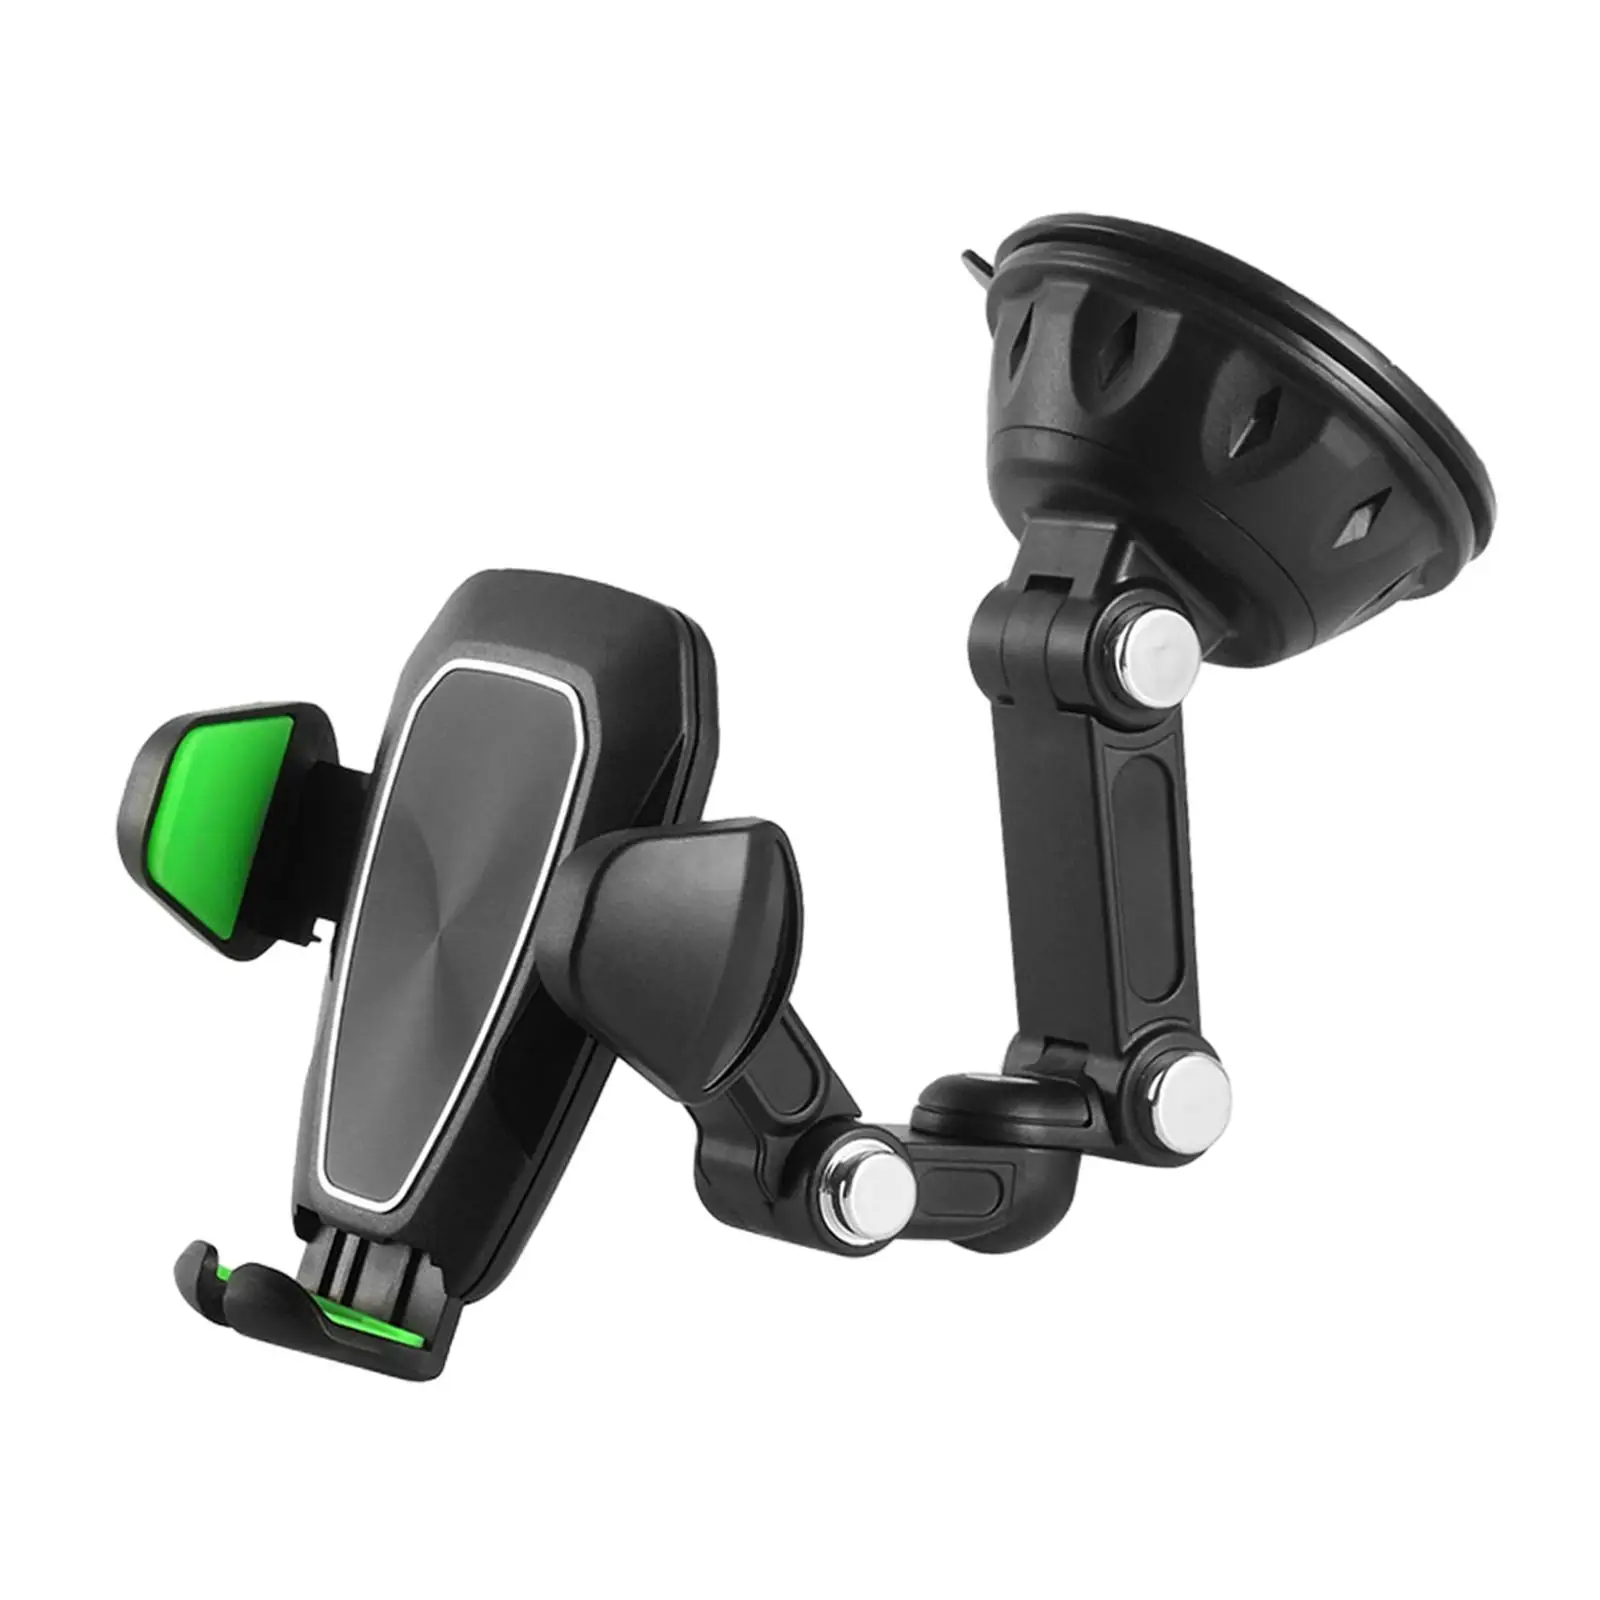 Car Mount Phone Holder, Phone Mount, Telescopic Arm Universal Durable Mobile Phone Bracket, for Car Dashboard Windshield